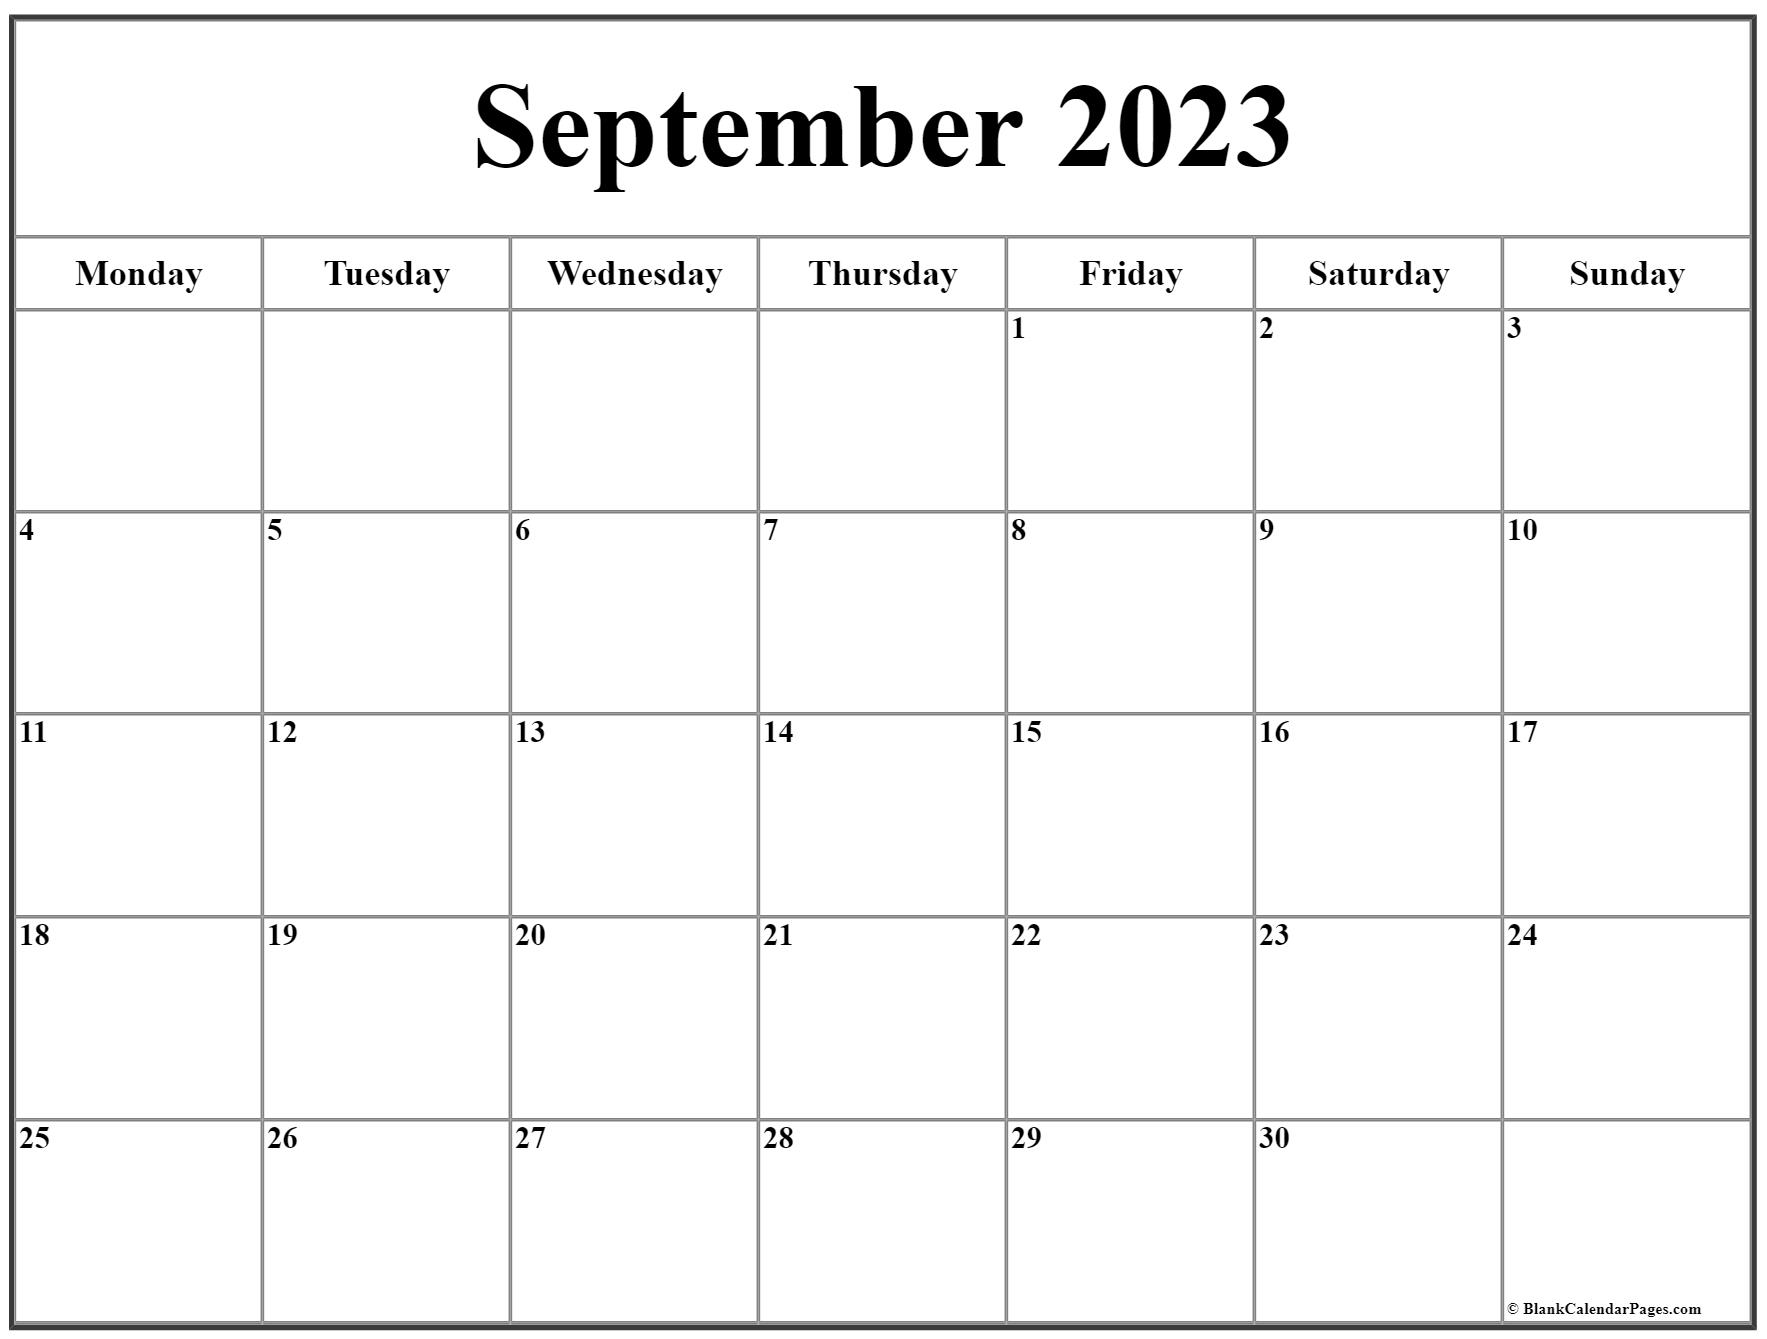 september-2023-monday-calendar-monday-to-sunday-riset